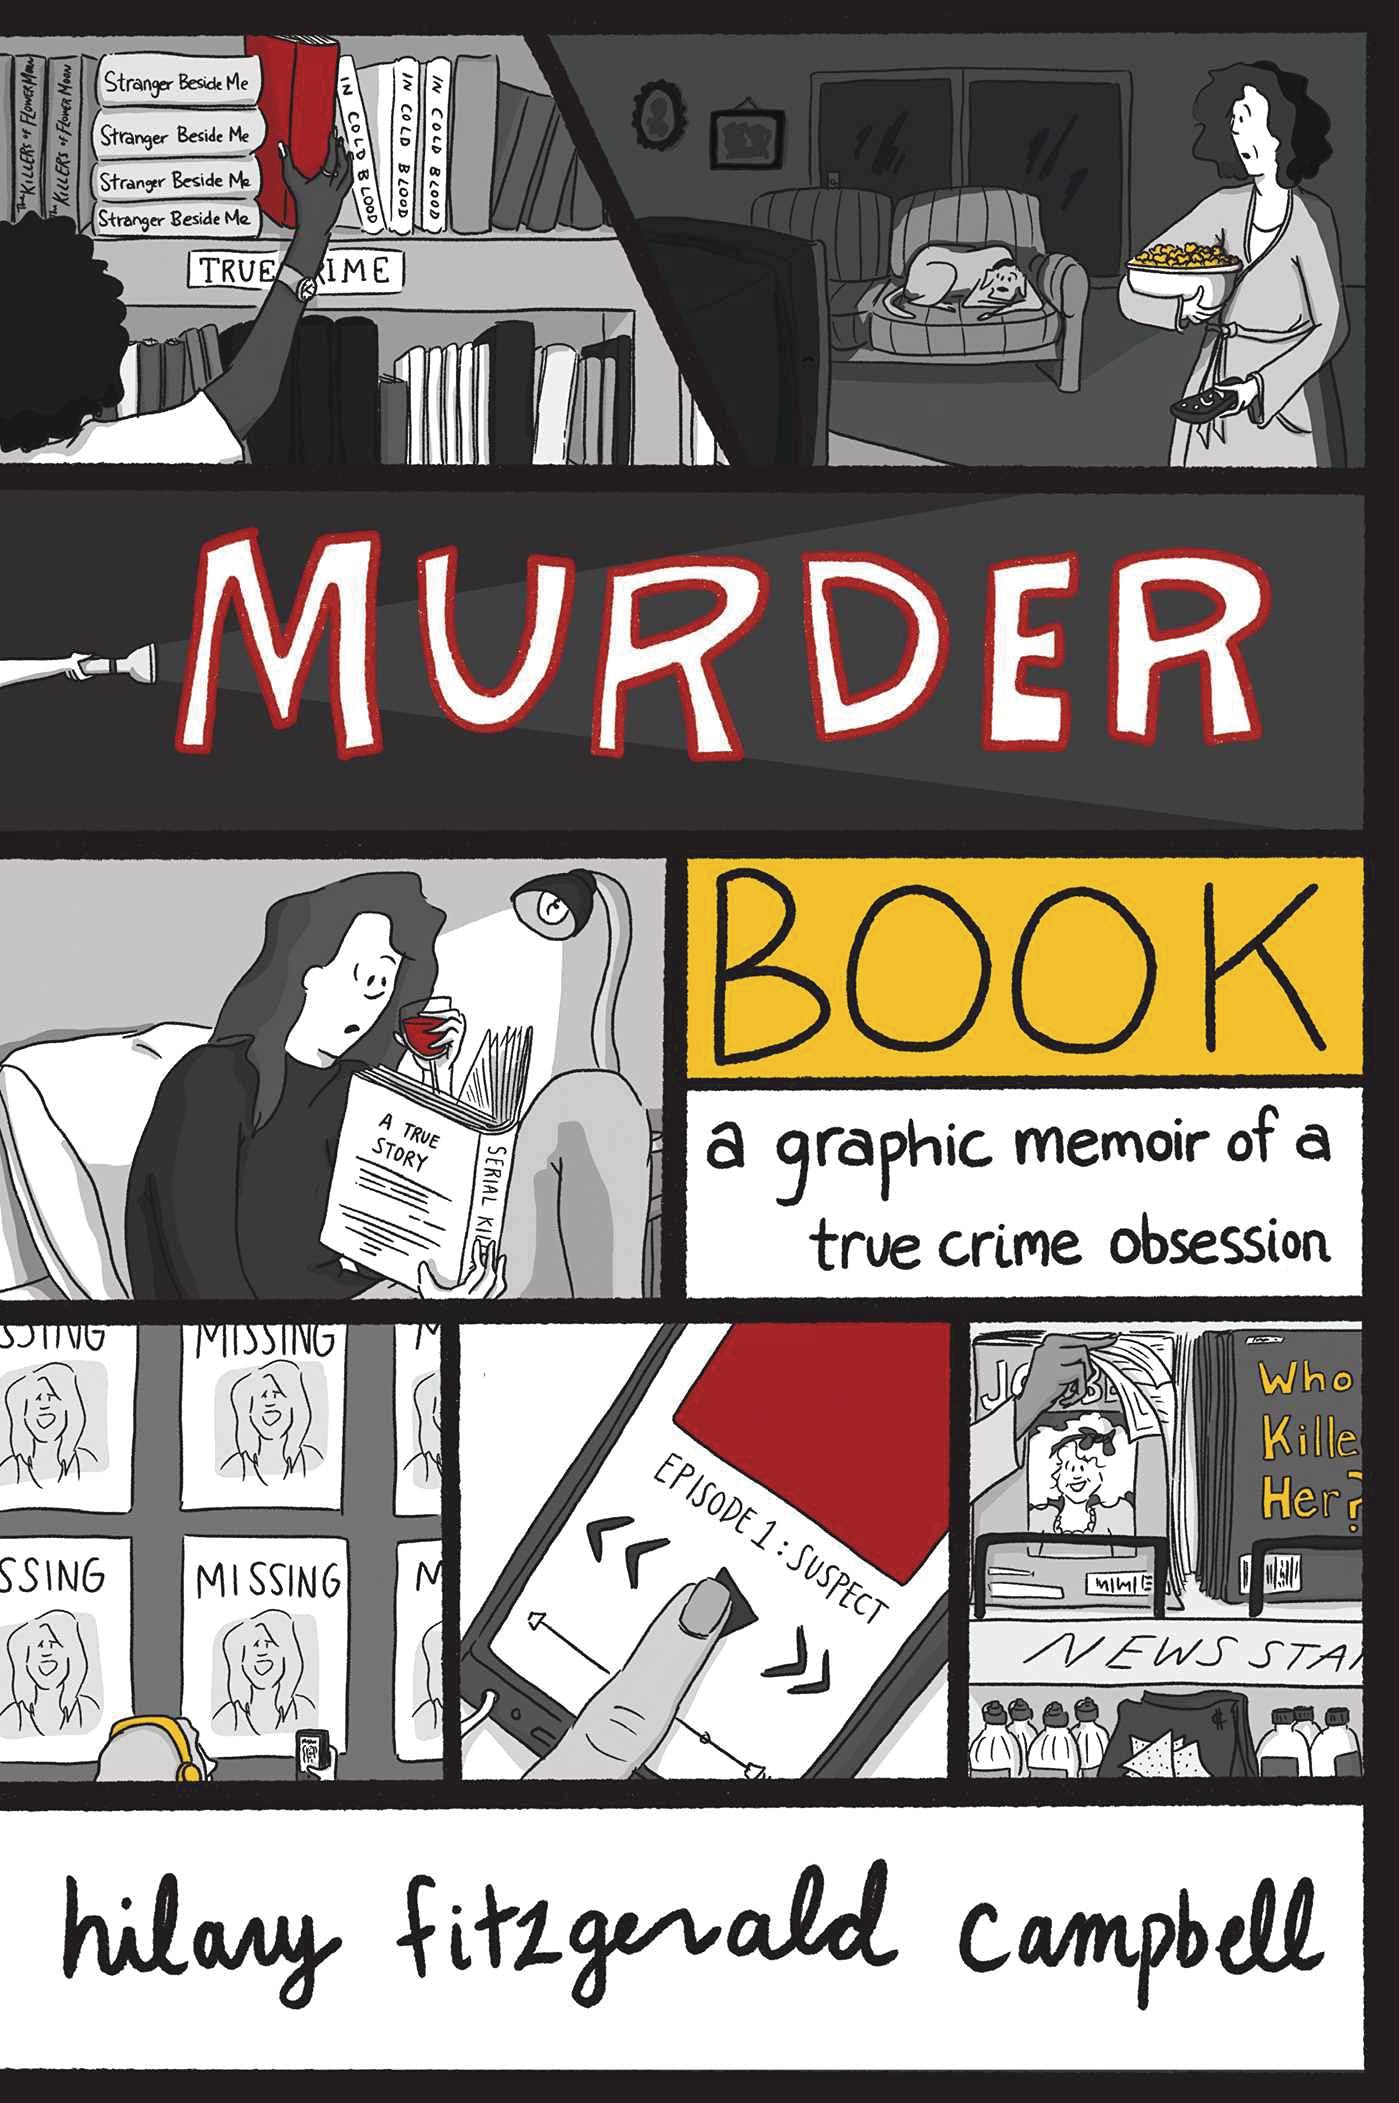 MURDER BOOK GRAPHIC MEMOIR TRUE CRIME OBSESSION | L.A. Mood Comics and Games